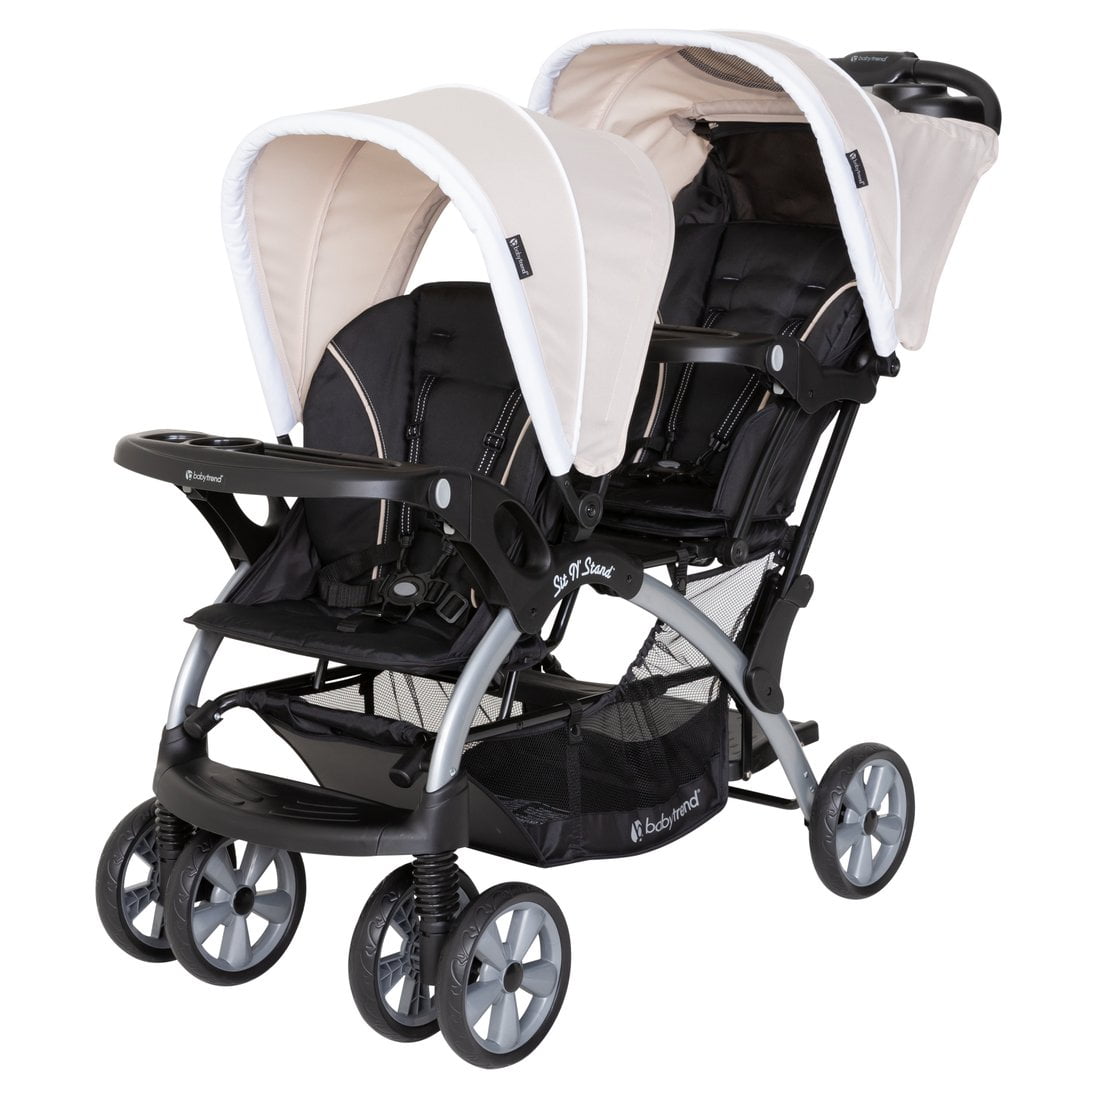 Graco Ready2Grow LX Stroller w 12 Riding options fits 2 Infant Car Seats Glacier 